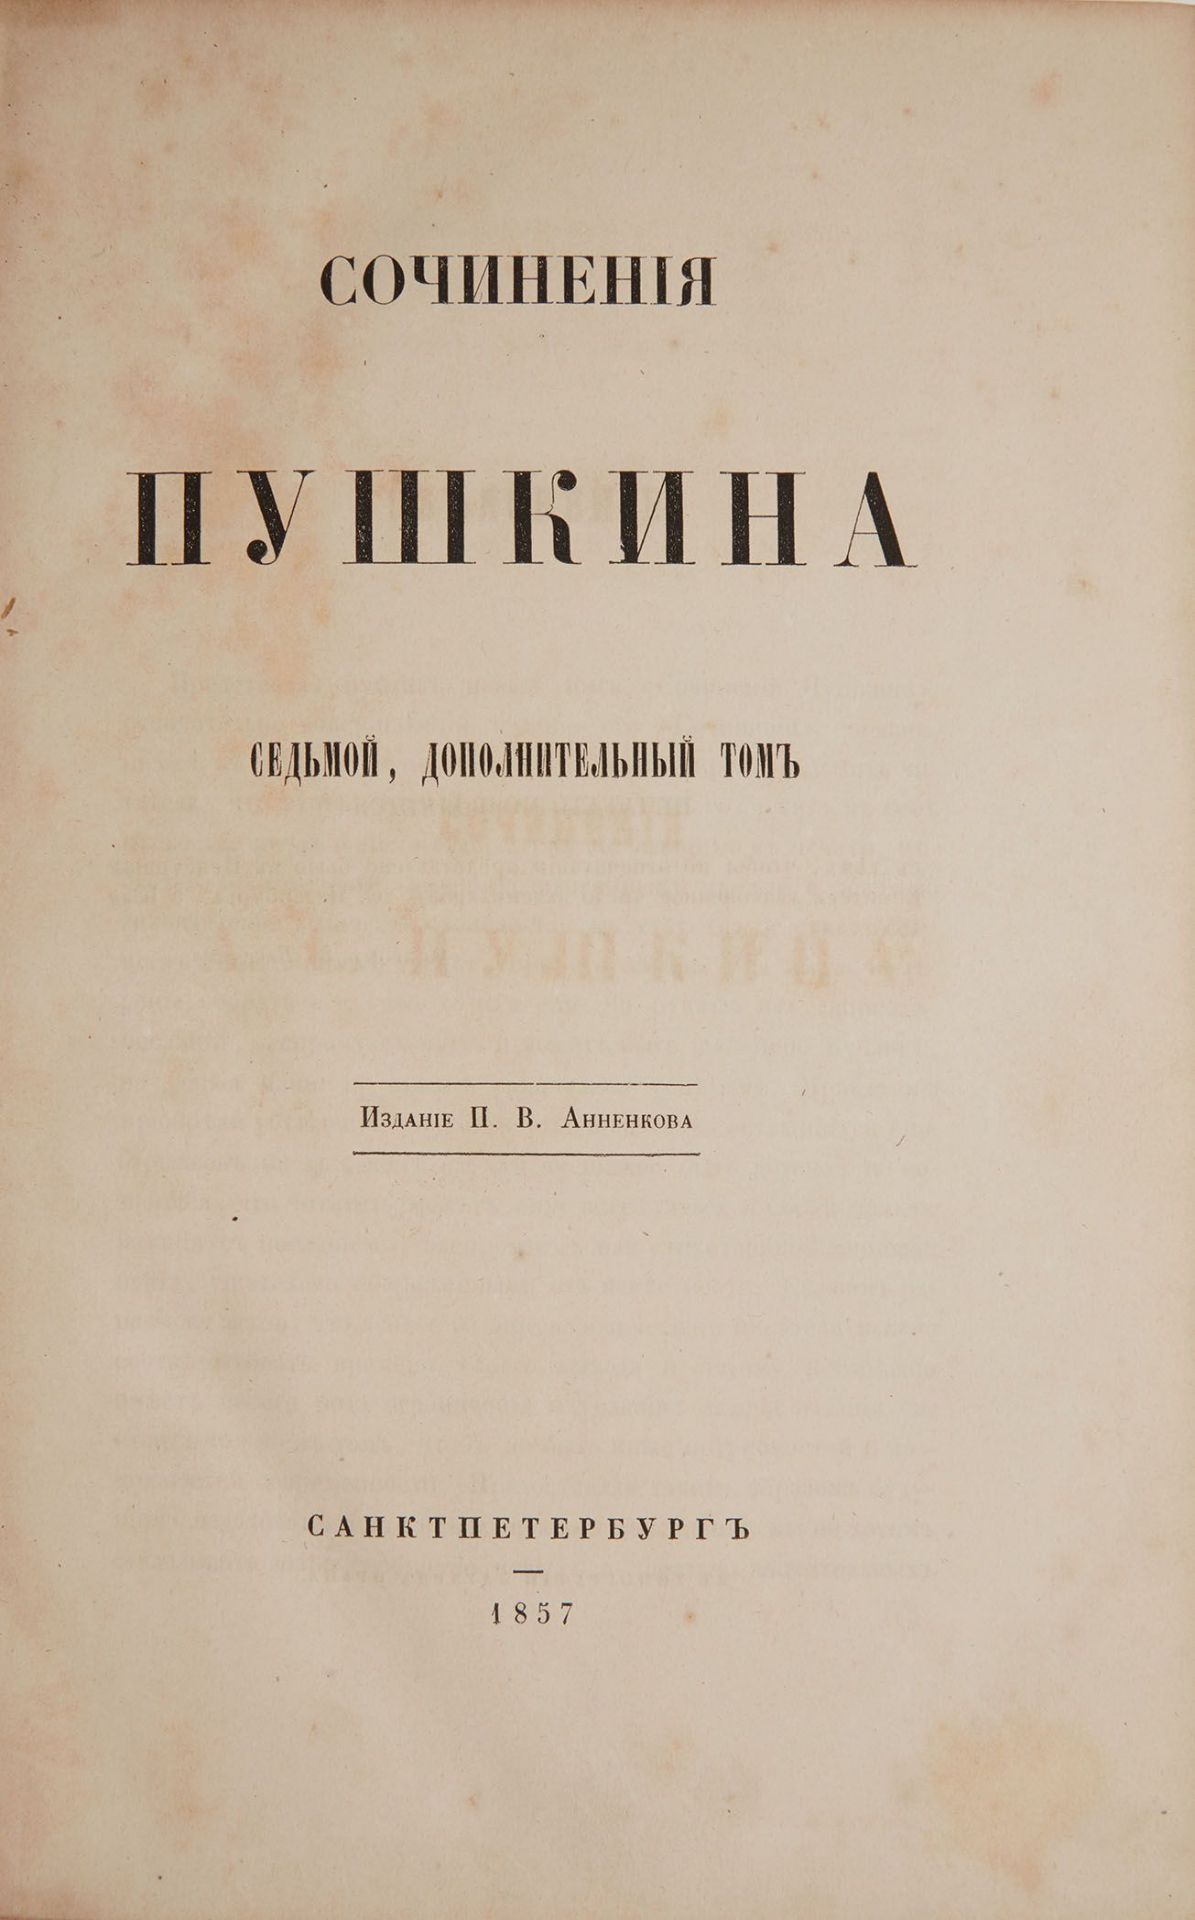 PUSHKIN, ALEXANDER (1799-1837) - Oeuvres. St Petersburg: P.V.Annenkov, 1857. [...]